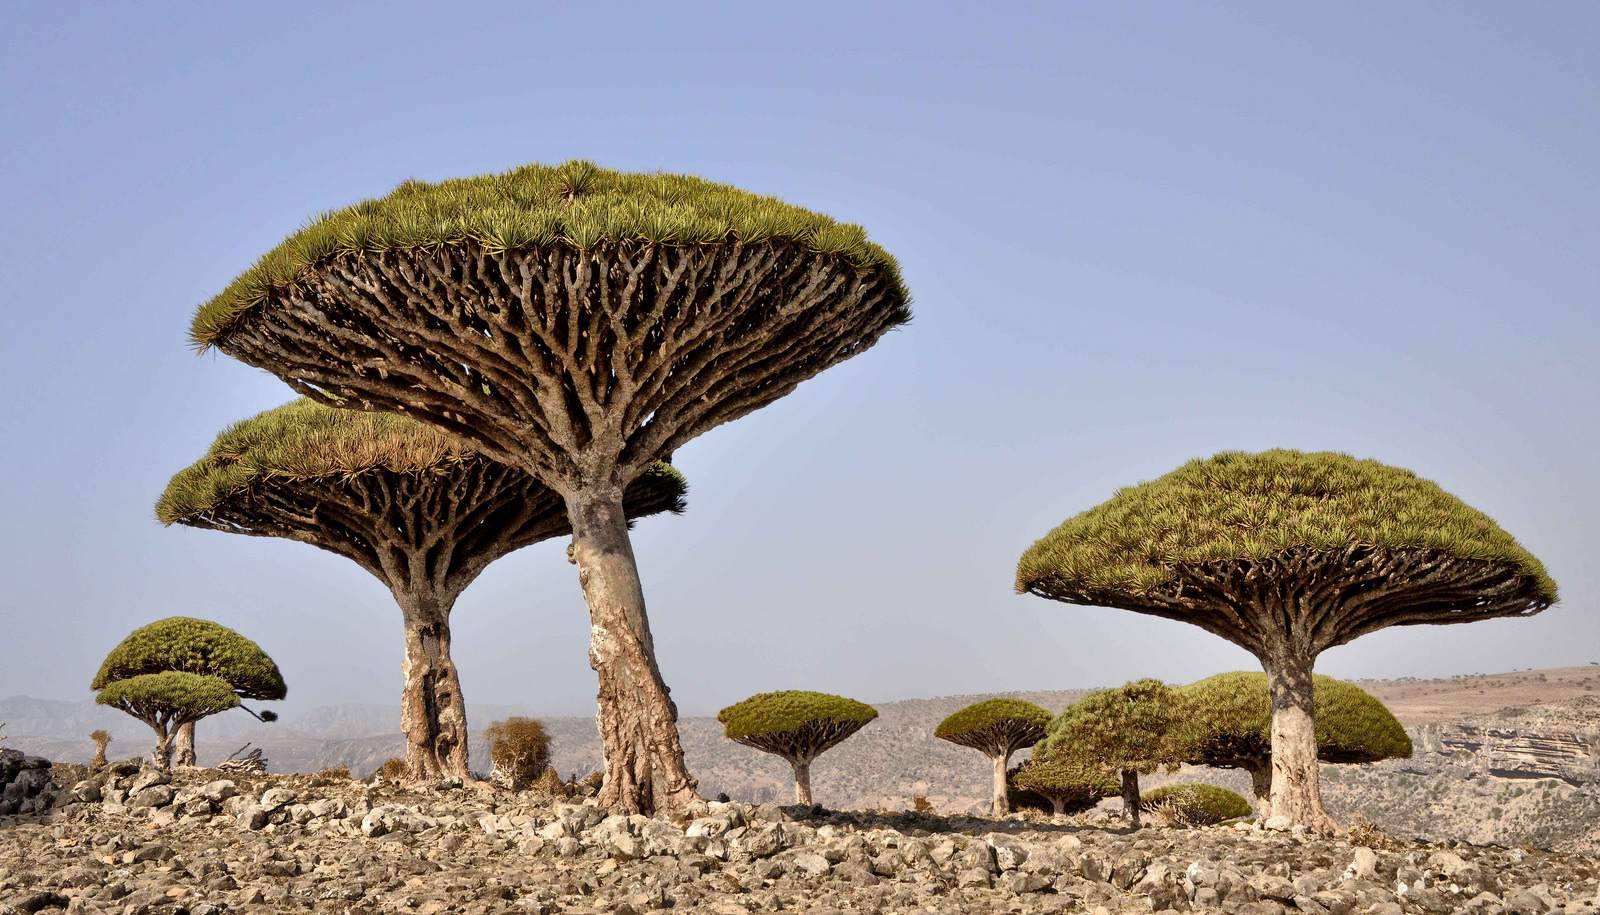 socotra1 Dragons Blood Tree at Socotra Island, Yemen